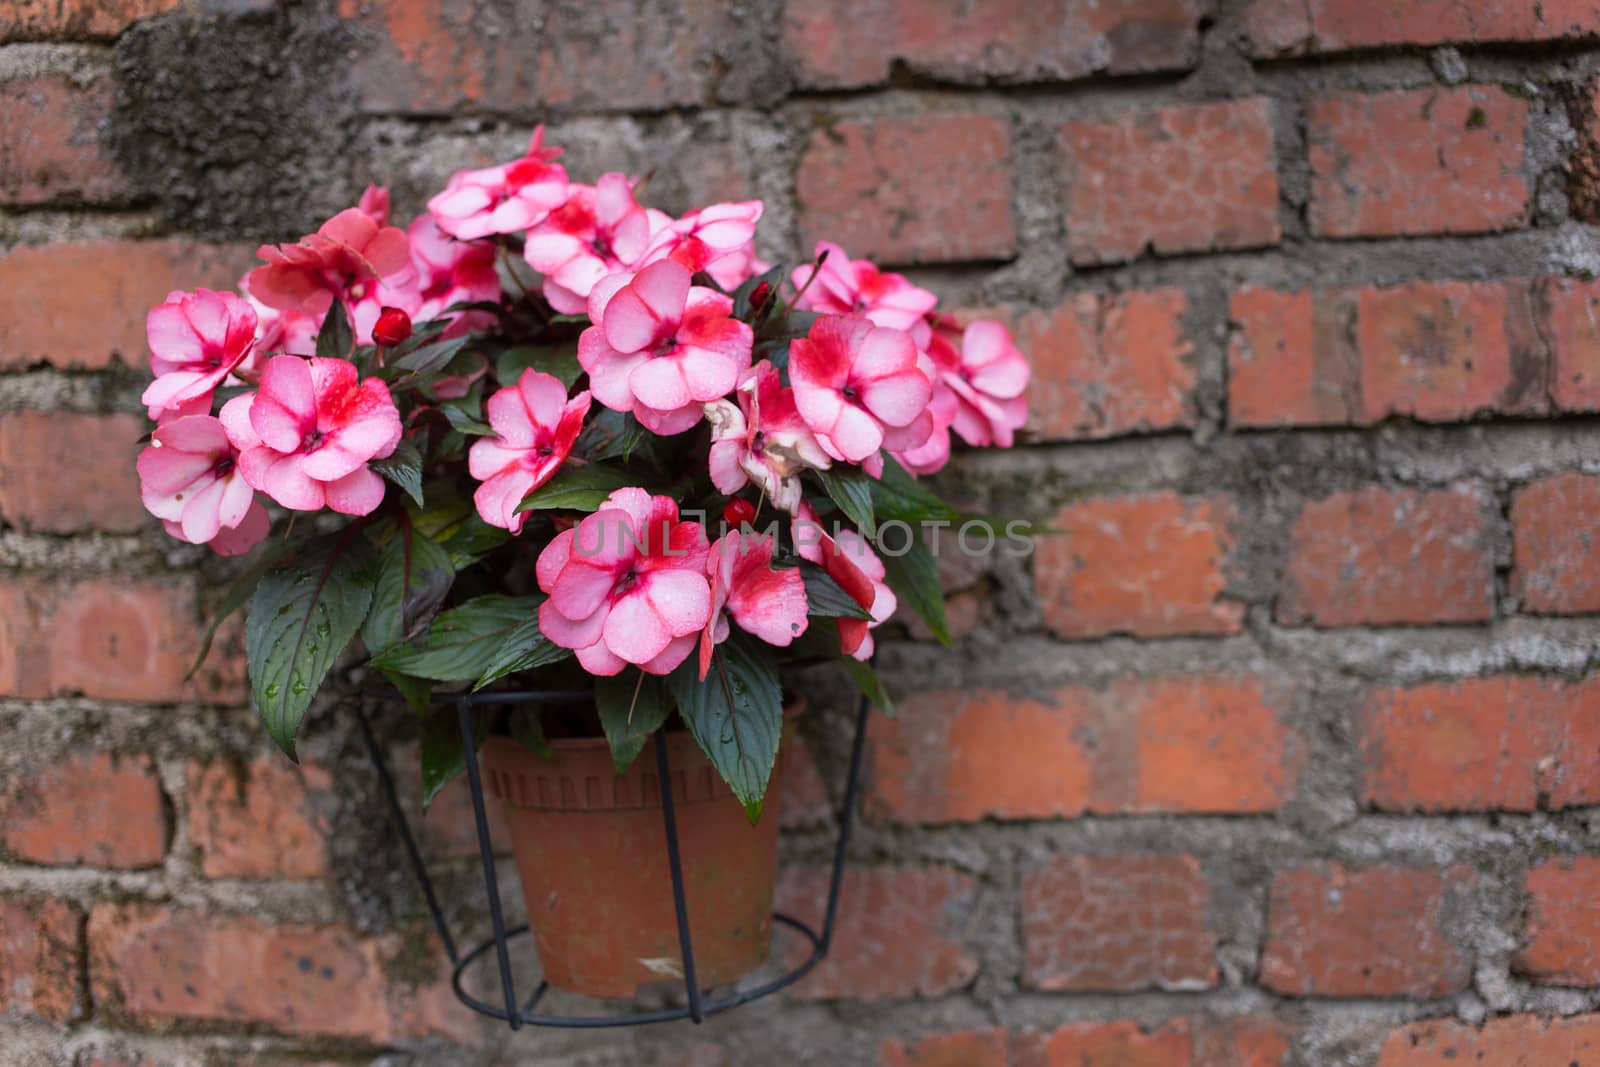 pink flower in pot on brick wall - garden decoration